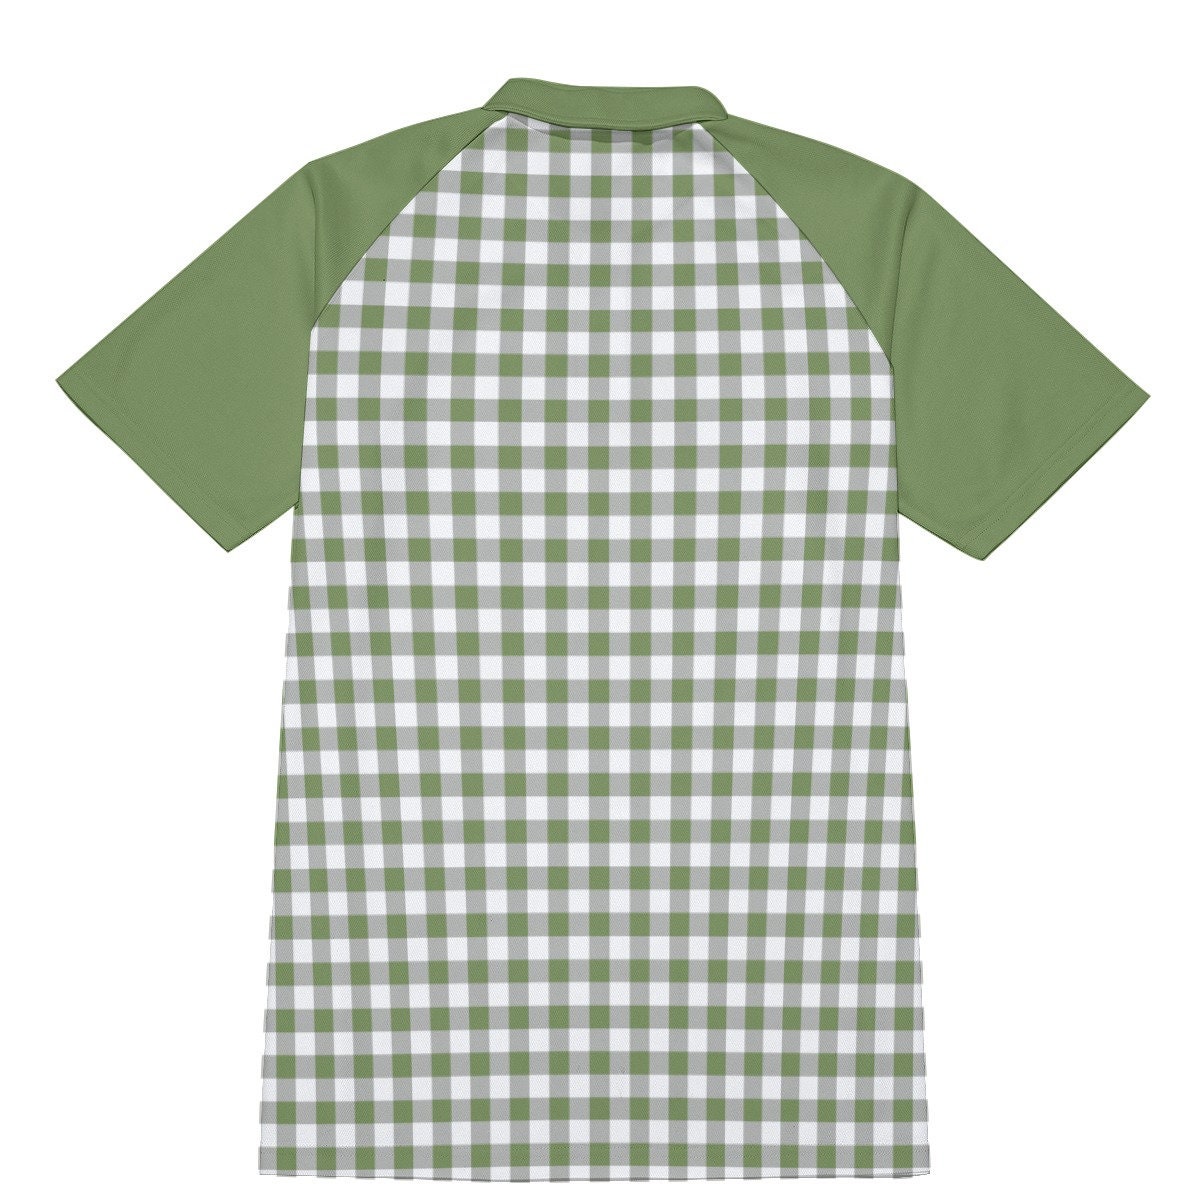 Polo-Shirt, grünes Polo-Shirt, Herren-Vintage-Shirt, Vintage-Stil-Shirt für Herren, Herren-Retro-Shirt, 60er-Jahre-Herren-Top, grünes Gingham-Shirt, Herren-Shirt